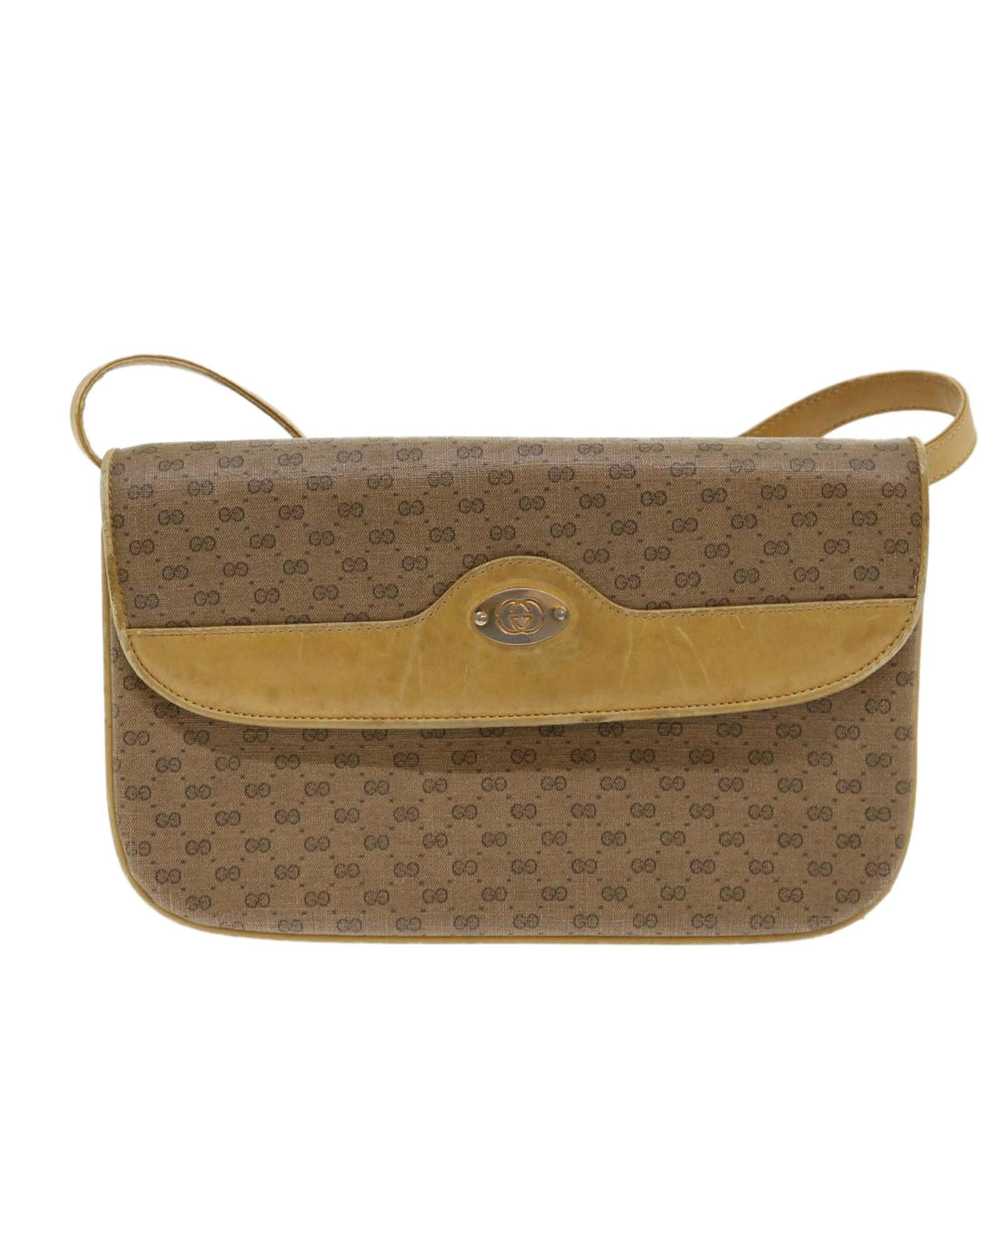 Gucci Luxury Gucci Beige Canvas Shoulder Bag - image 2